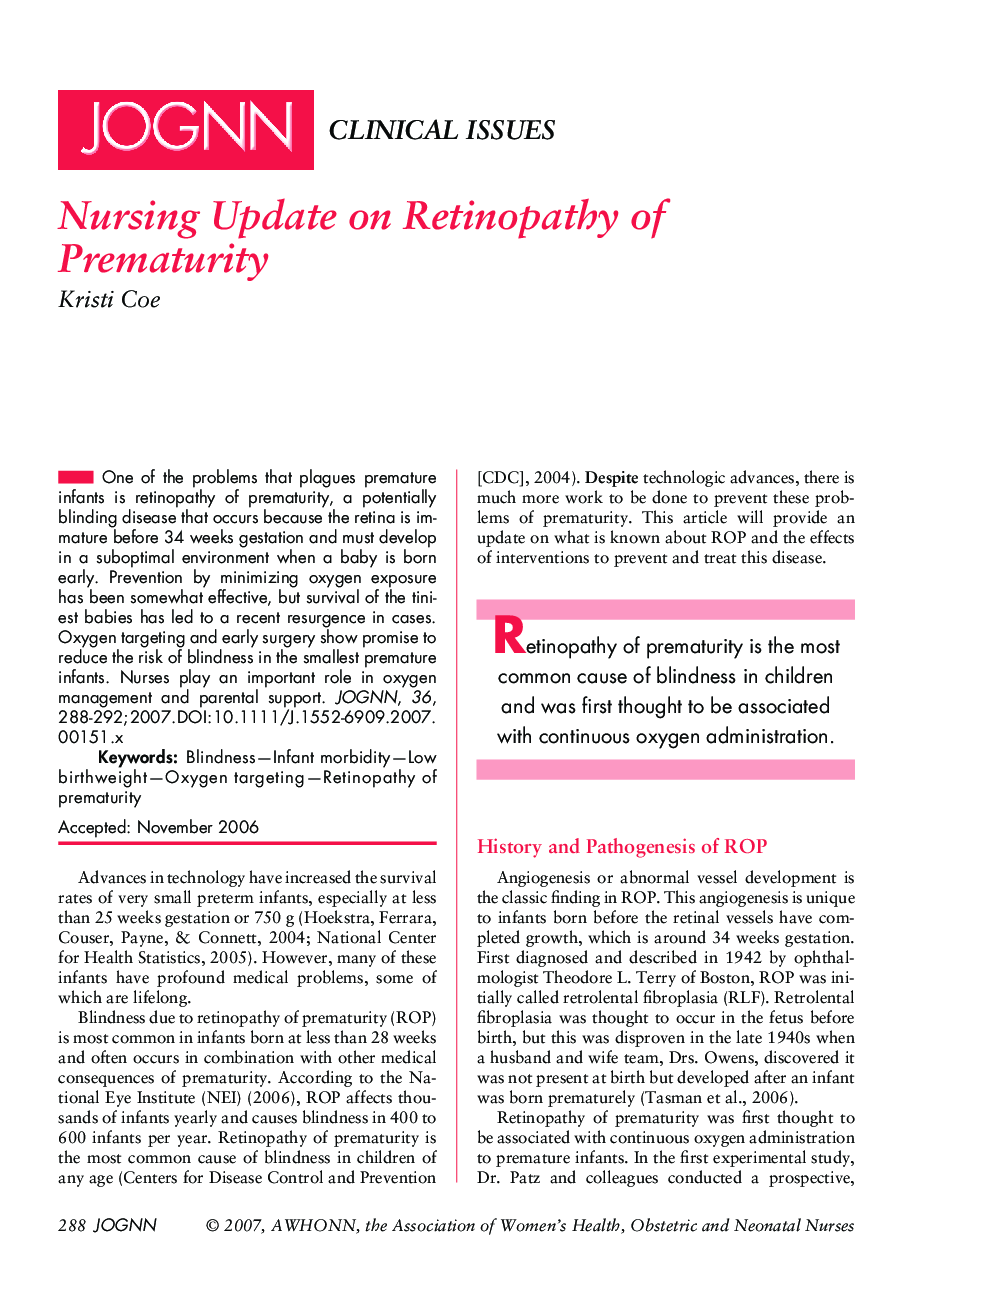 Nursing Update on Retinopathy of Prematurity